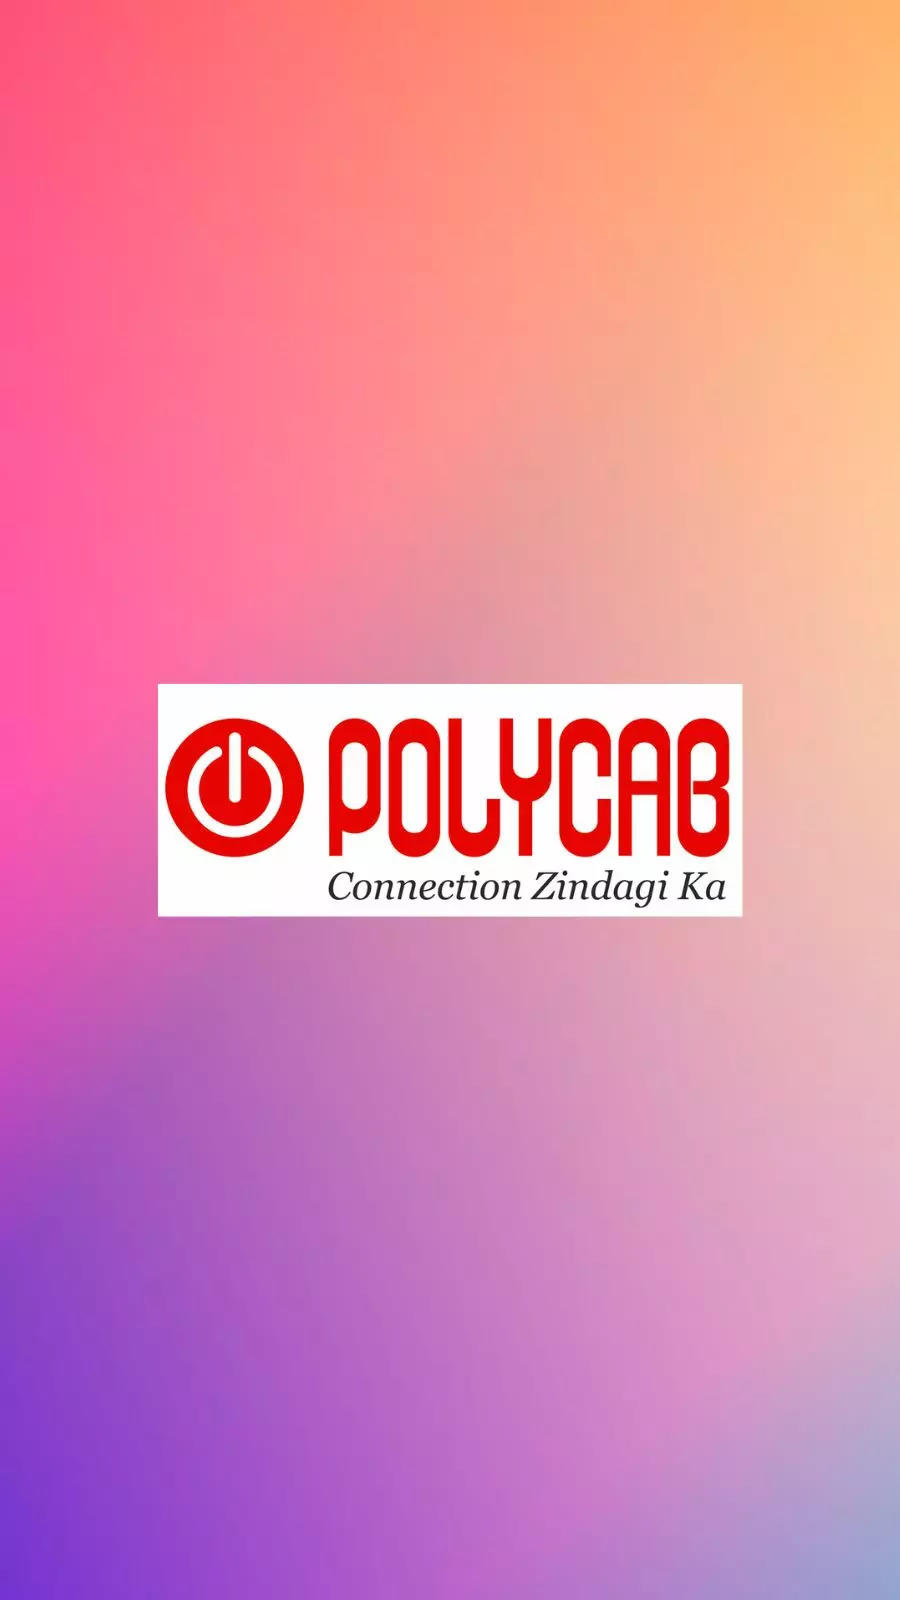 Polycab India Ltd. – Samachar Lahrein